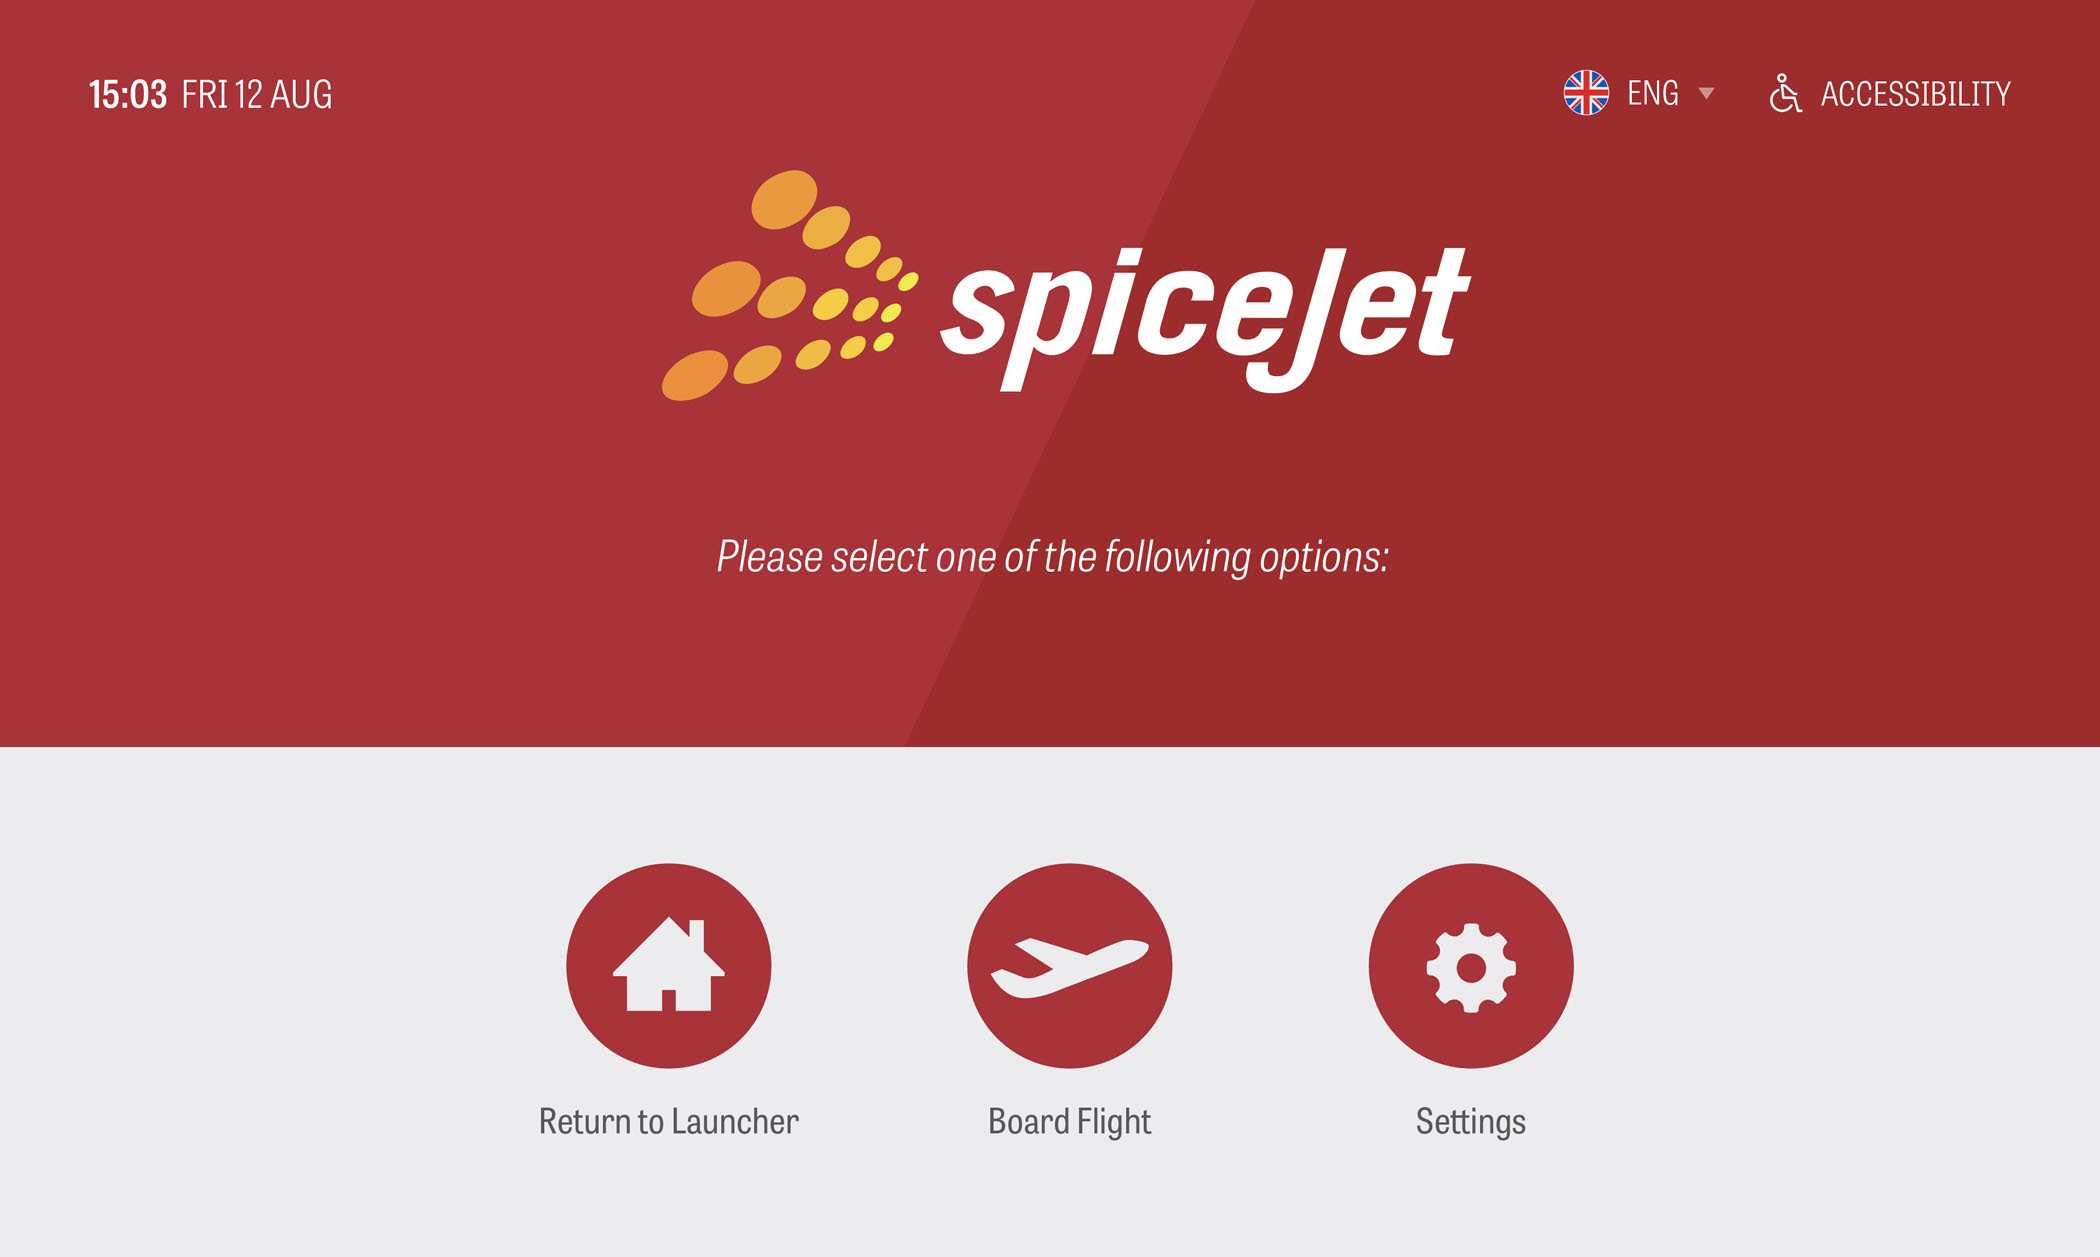 SpiceJet: Service Desk Application - Screen 1